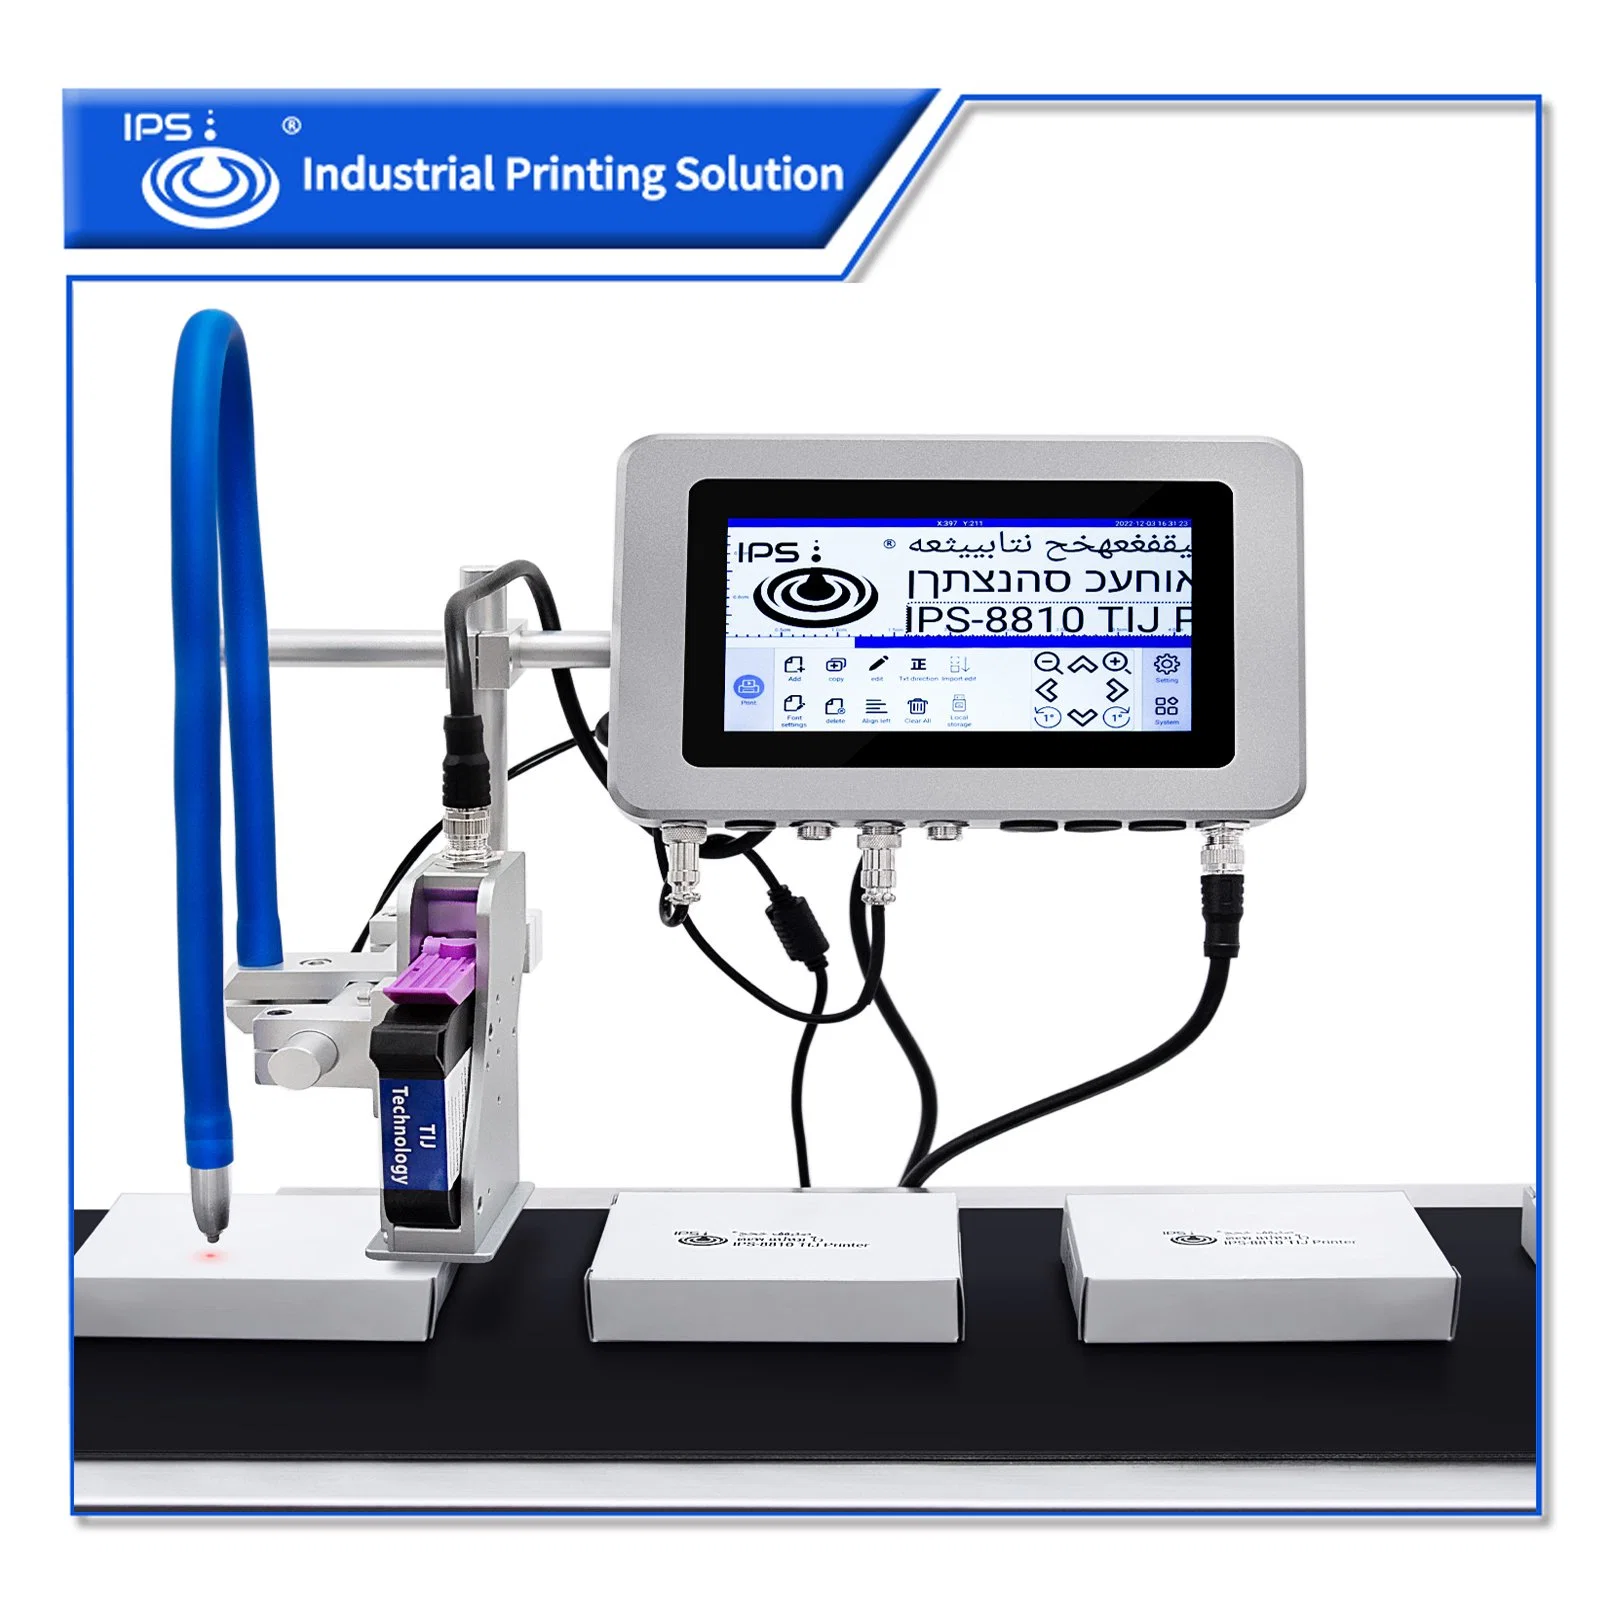 IPS-8610 New 25.4mm Thermal Inkjet Printer Tij Coding Machine Large Logo Plastic MFG Exp Date Online Printing with Conveyor Belt Including Ink Cartridges